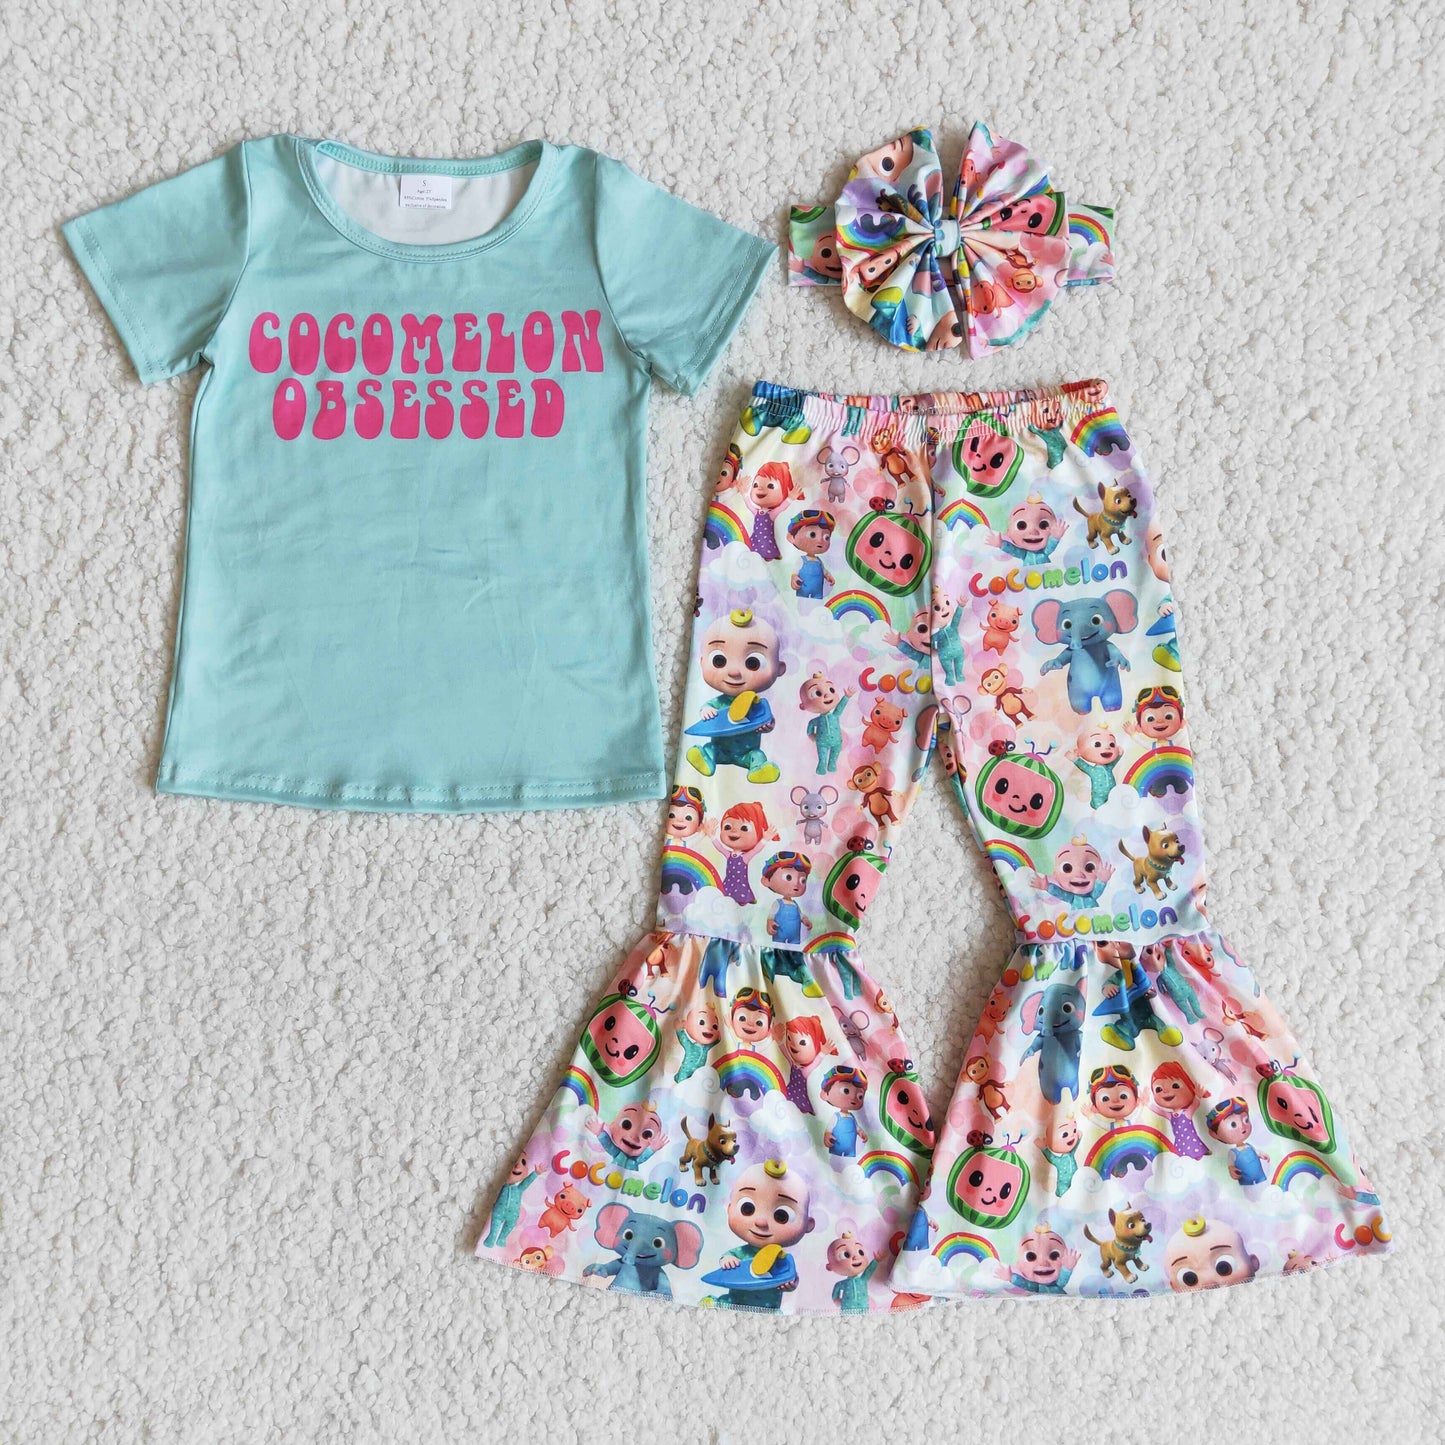 Obsessed short sleeve shirt melon pants toddler girls clothing set